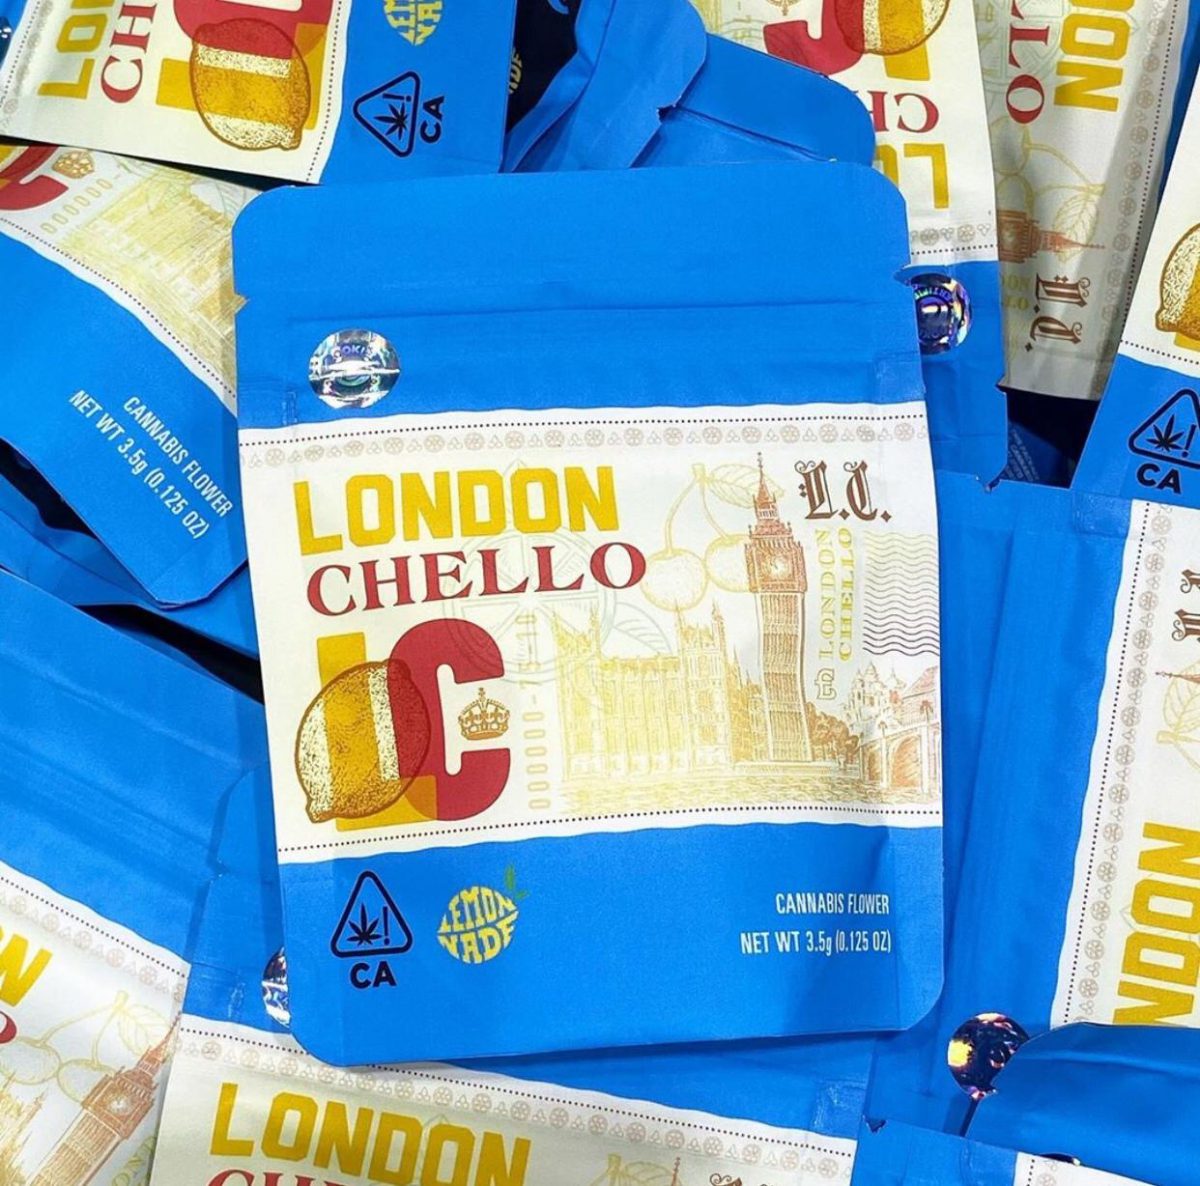 Buy London Chello Cookies Online